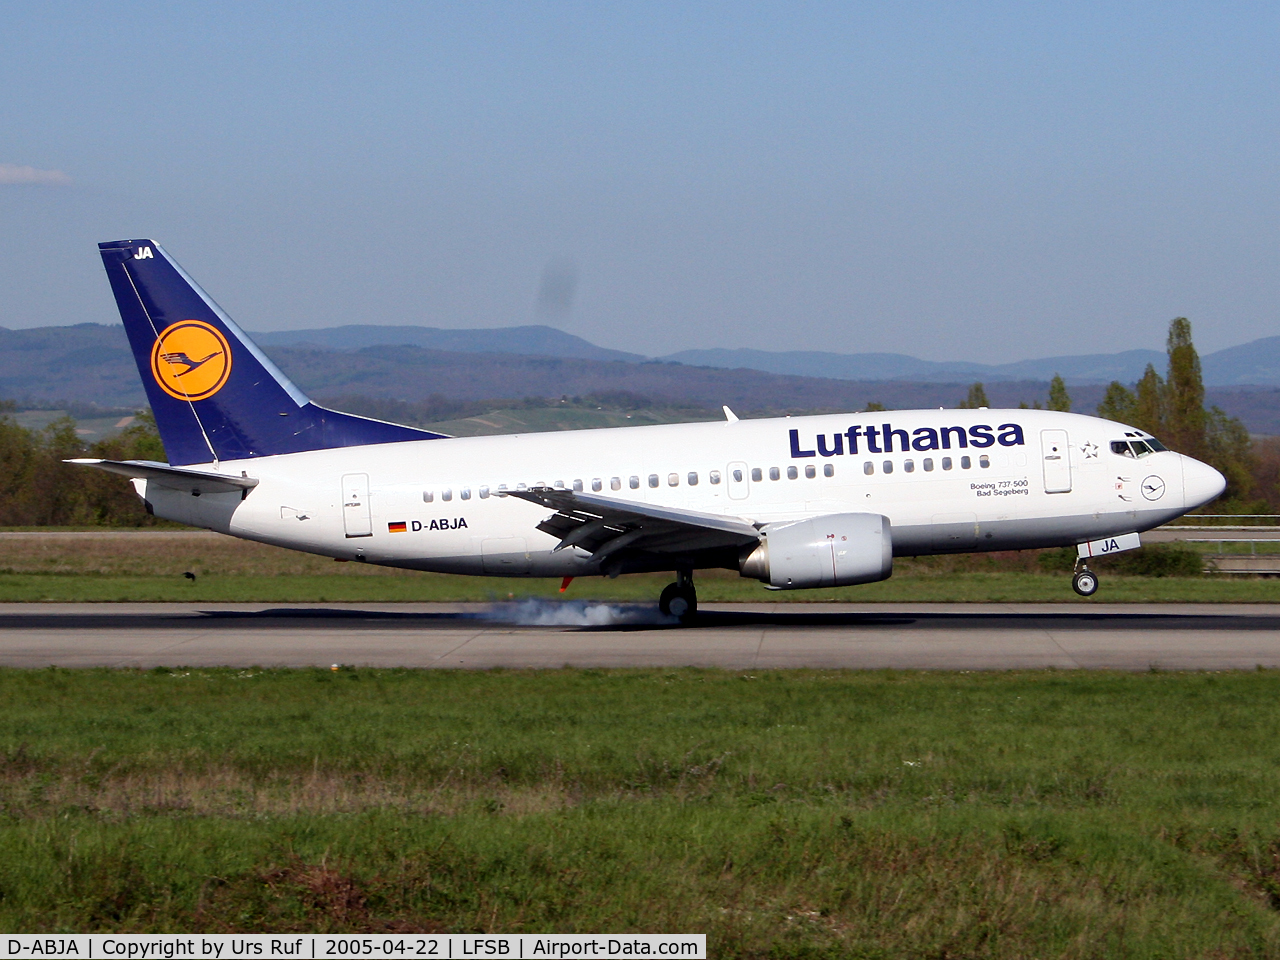 D-ABJA, 1991 Boeing 737-530 C/N 25270, landing as Lufthansa LH1204 from Frankfurt